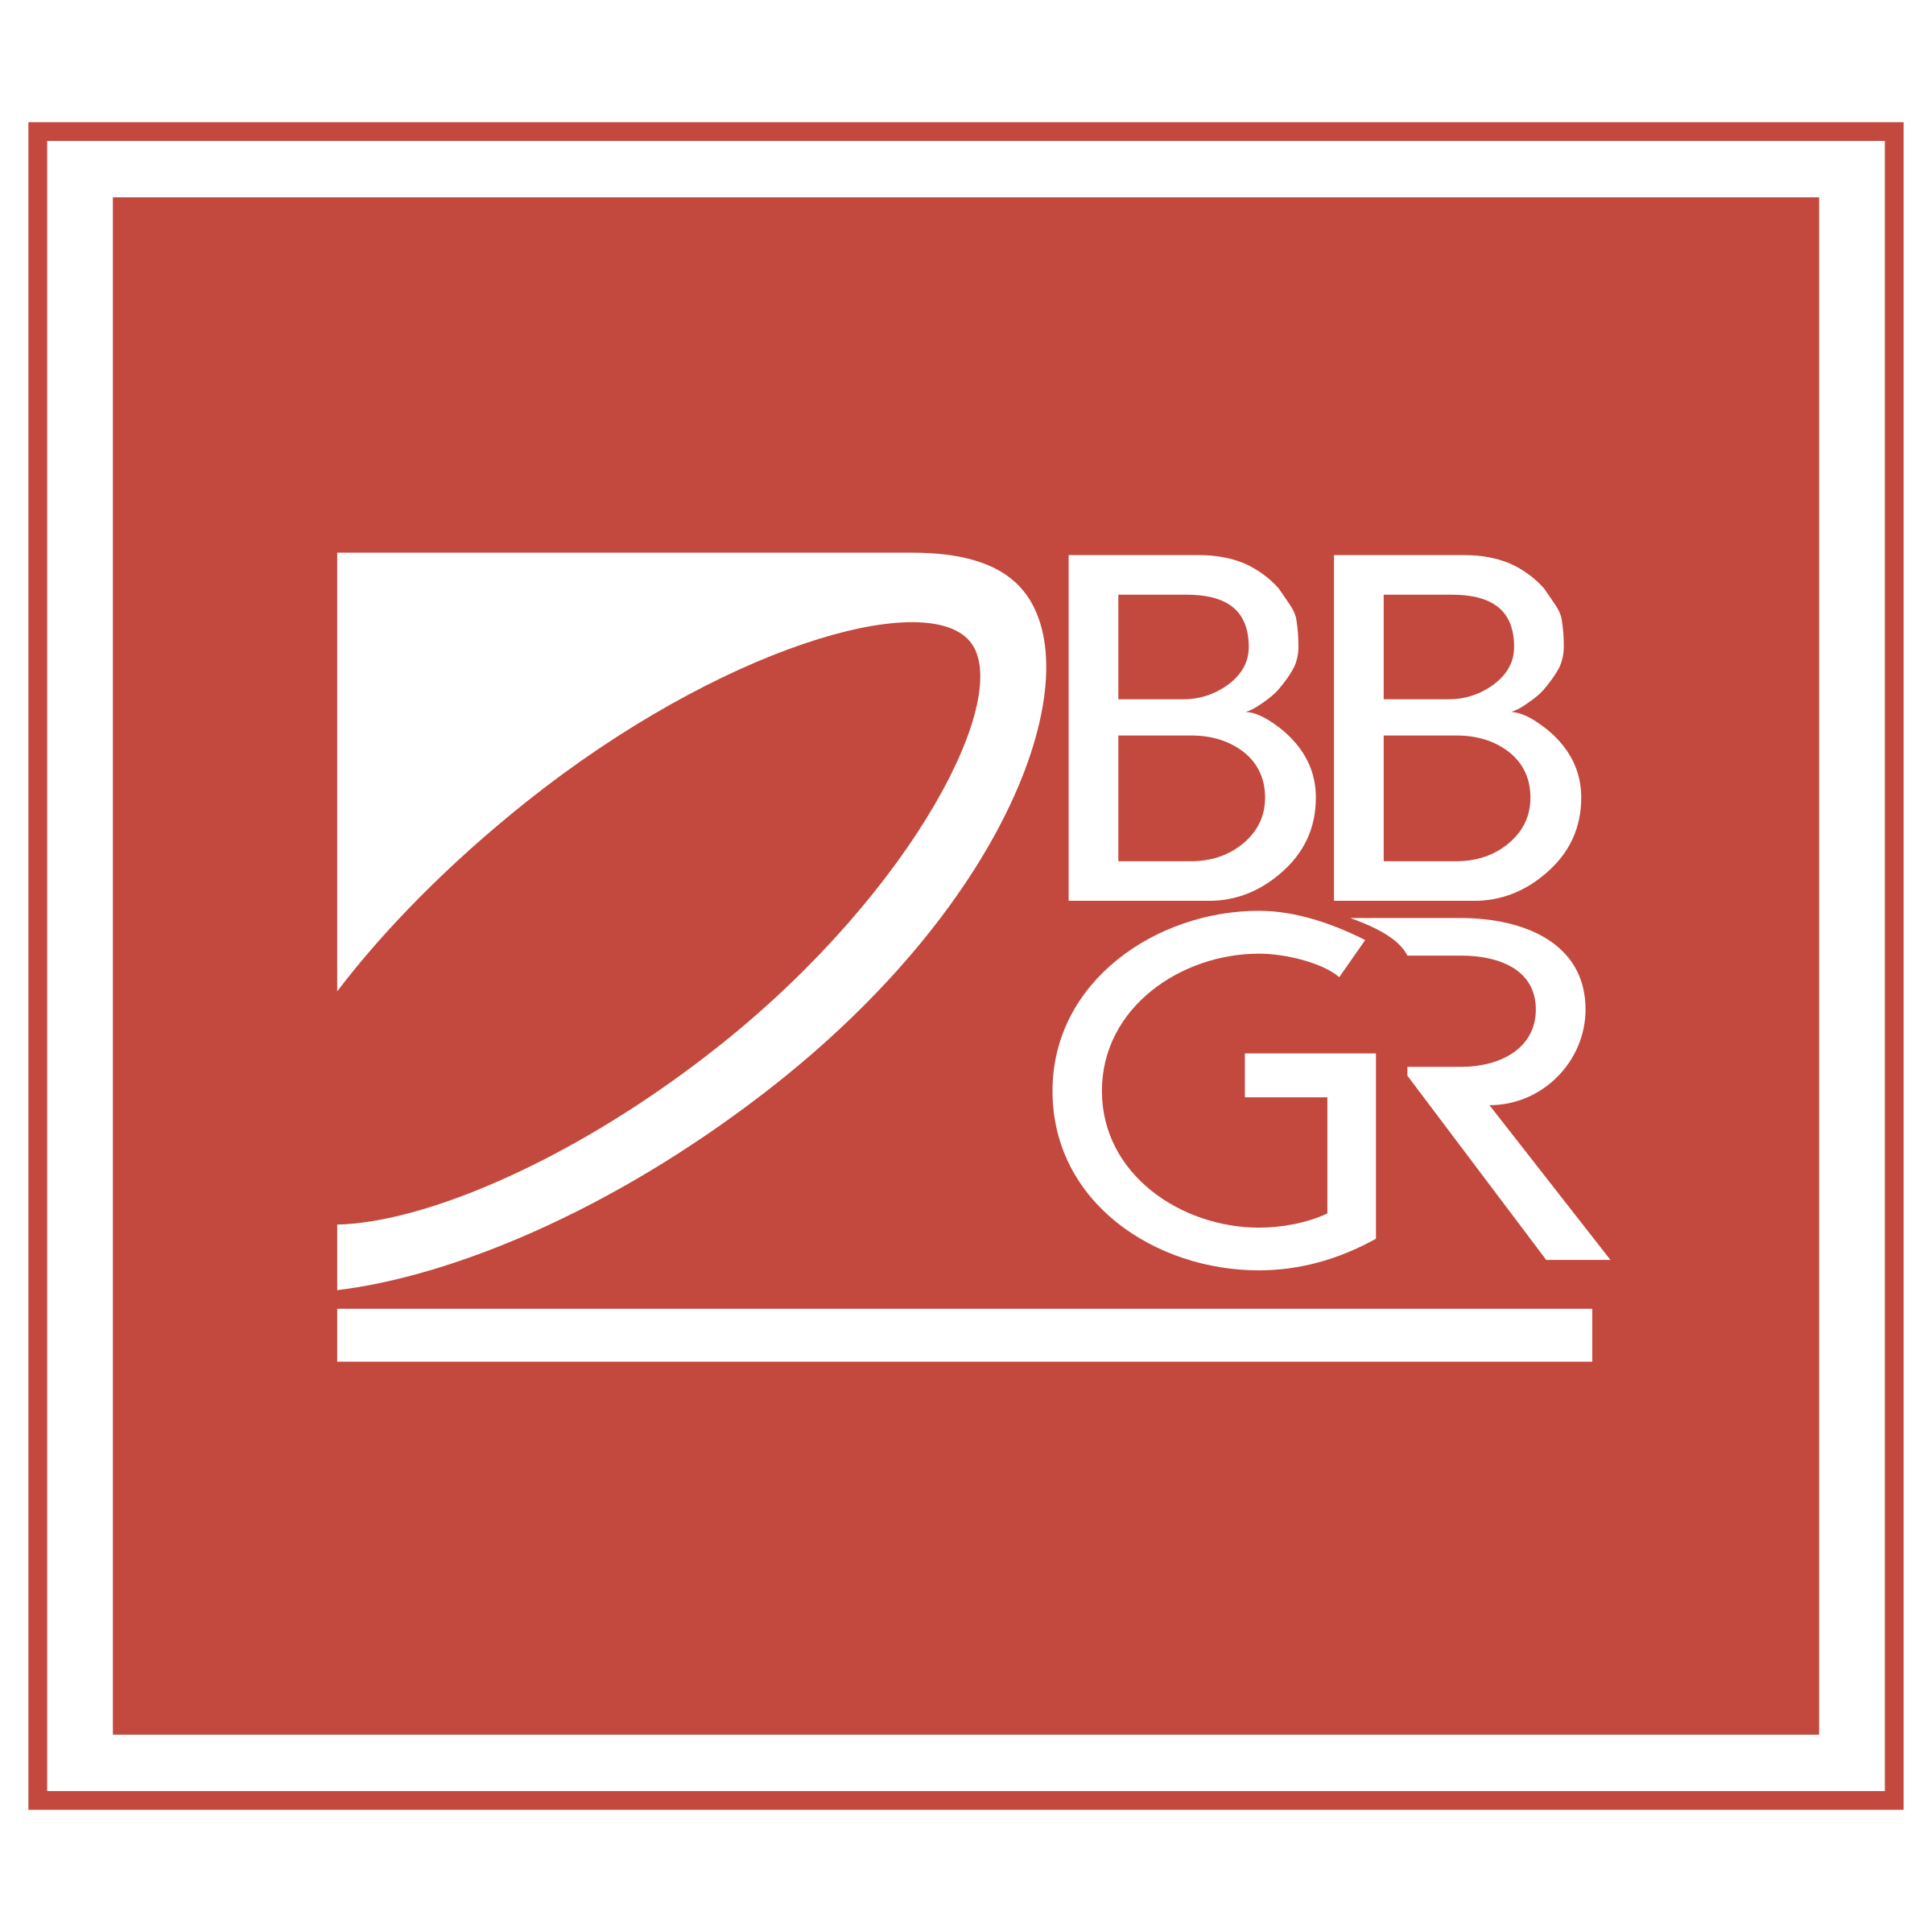 Bbgr Logo - BBGR Logo PNG Transparent & SVG Vector - Freebie Supply